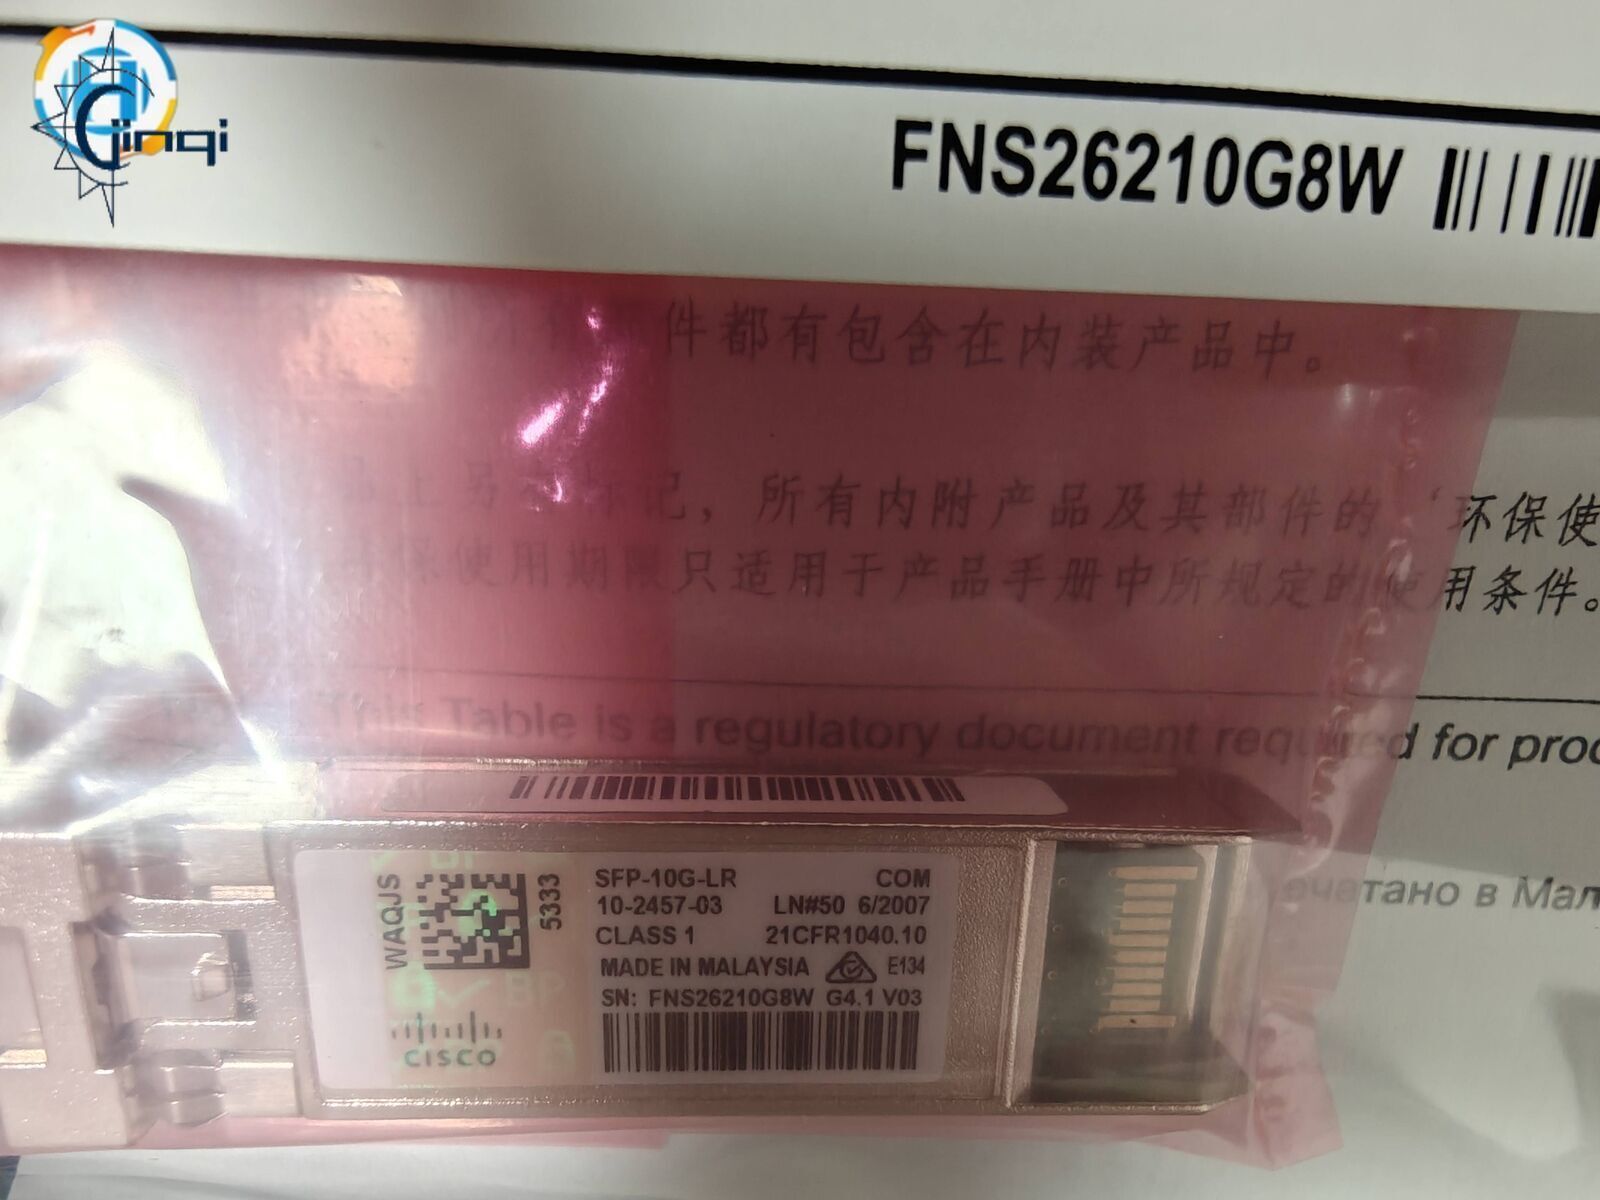 Green label hologram Cisco SFP-10G-LR-S SFP Transceiver Module